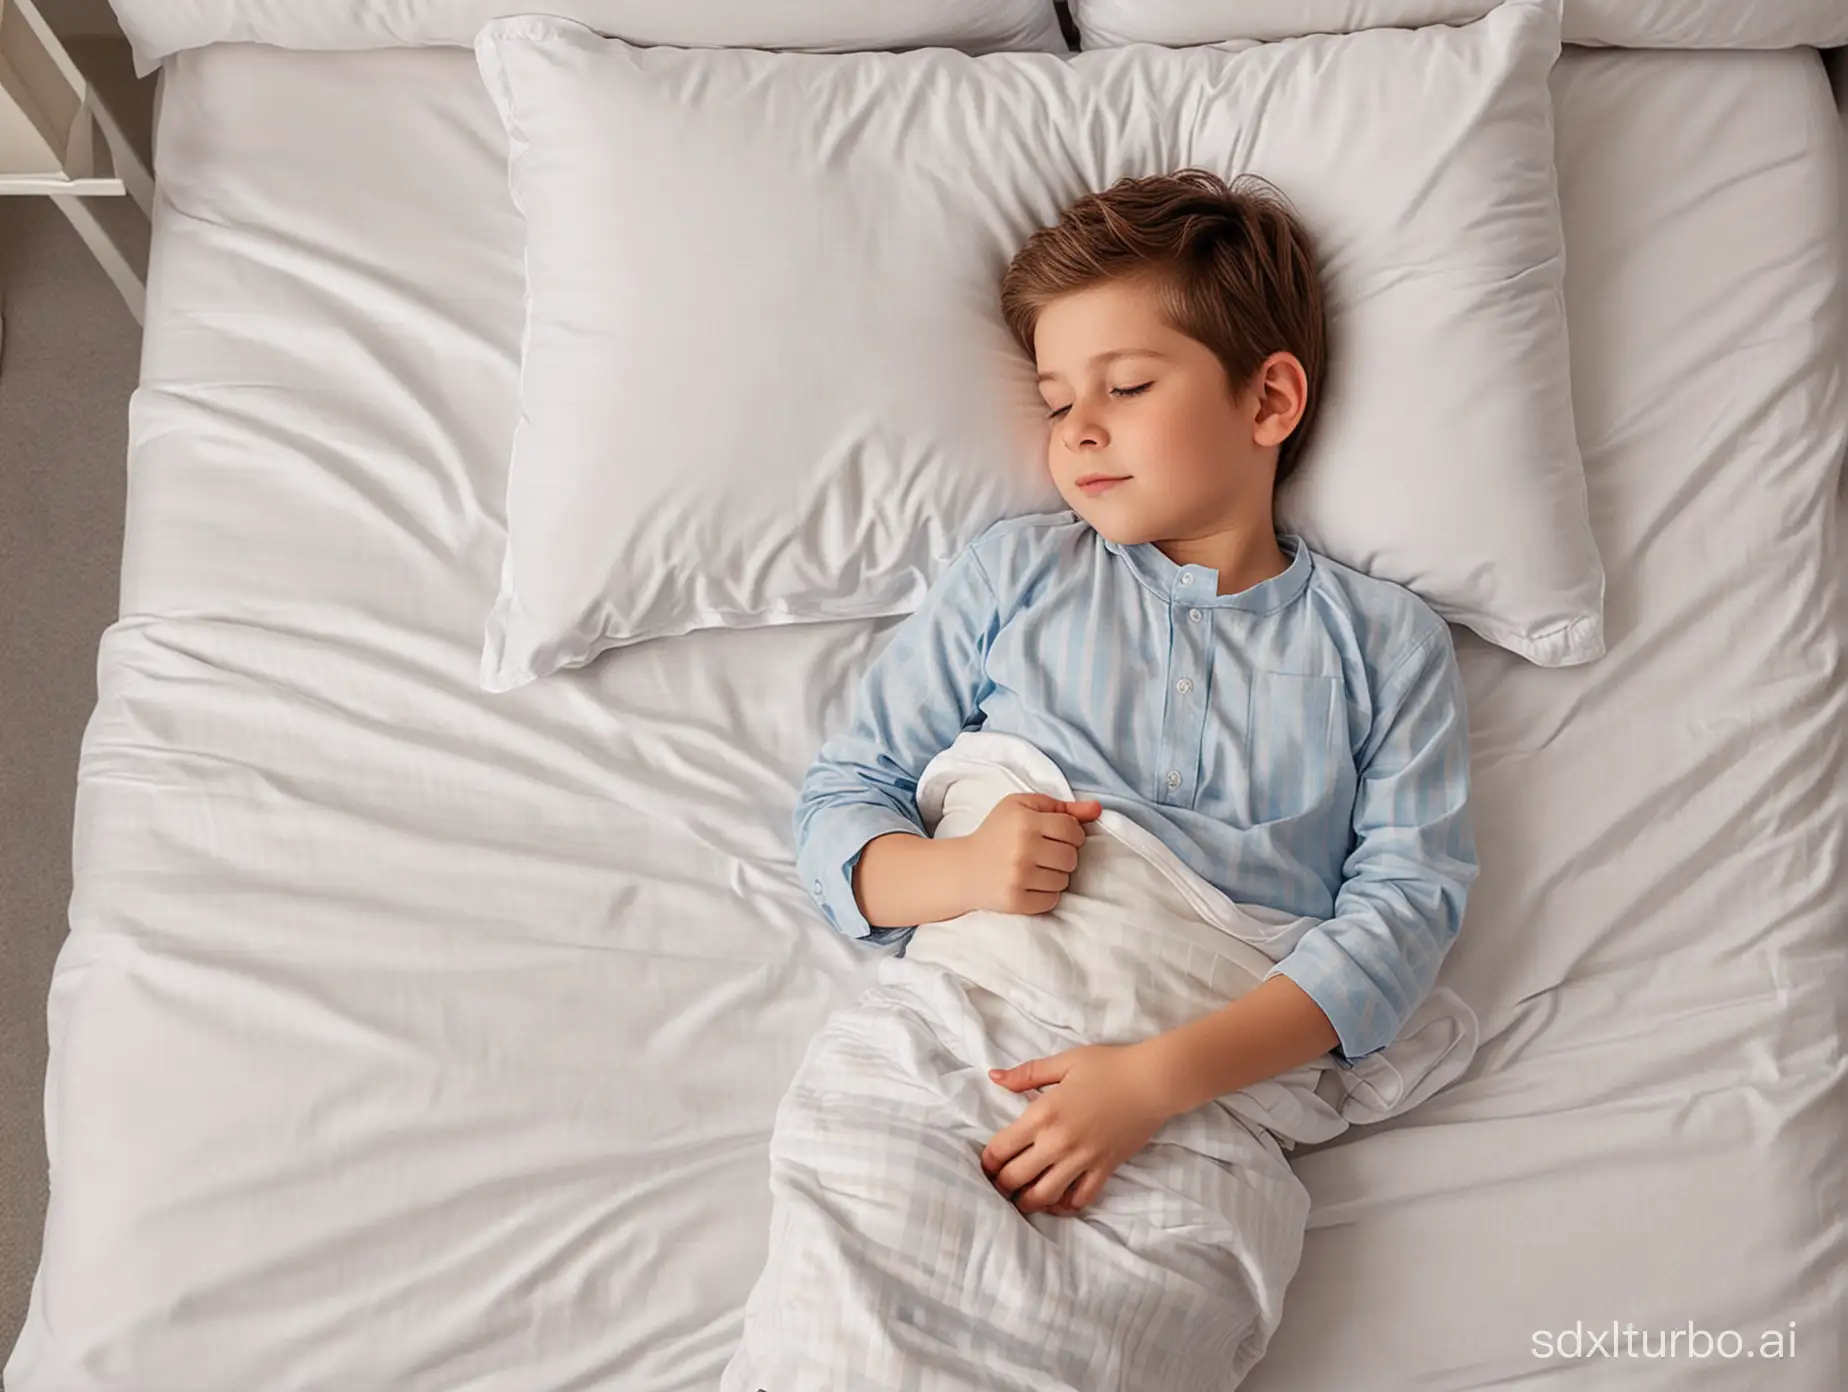 Peaceful-Slumber-Young-Boy-Sleeping-Comfortably-in-Bed